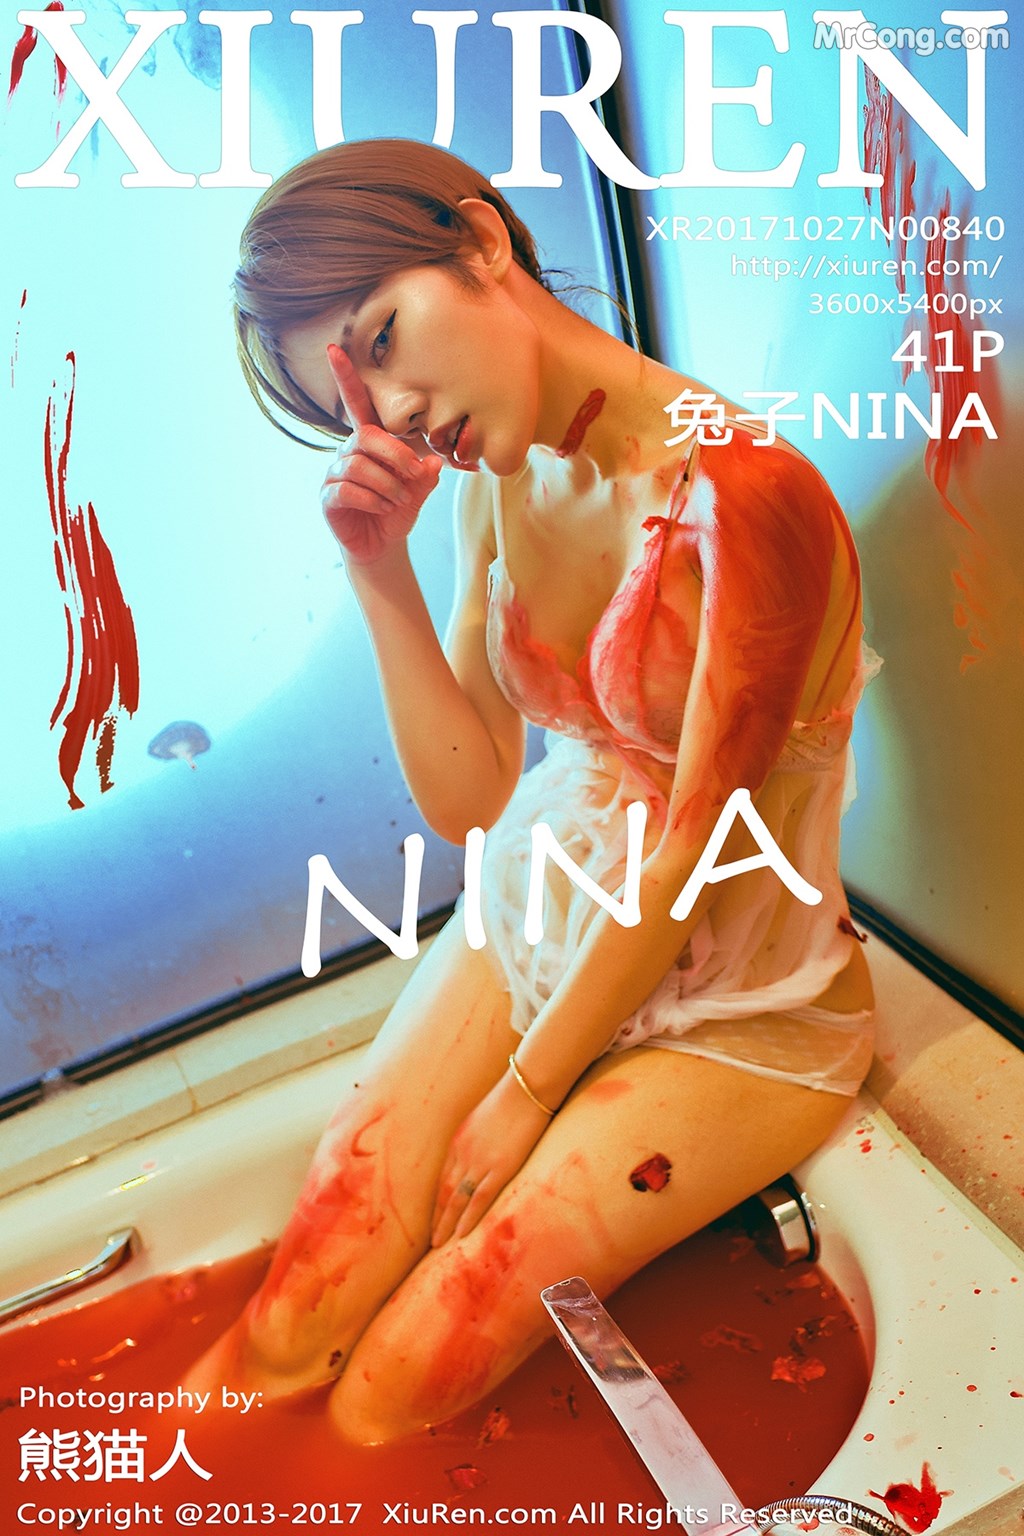 XIUREN No. 840: Model 兔子 NINA (42 photos)